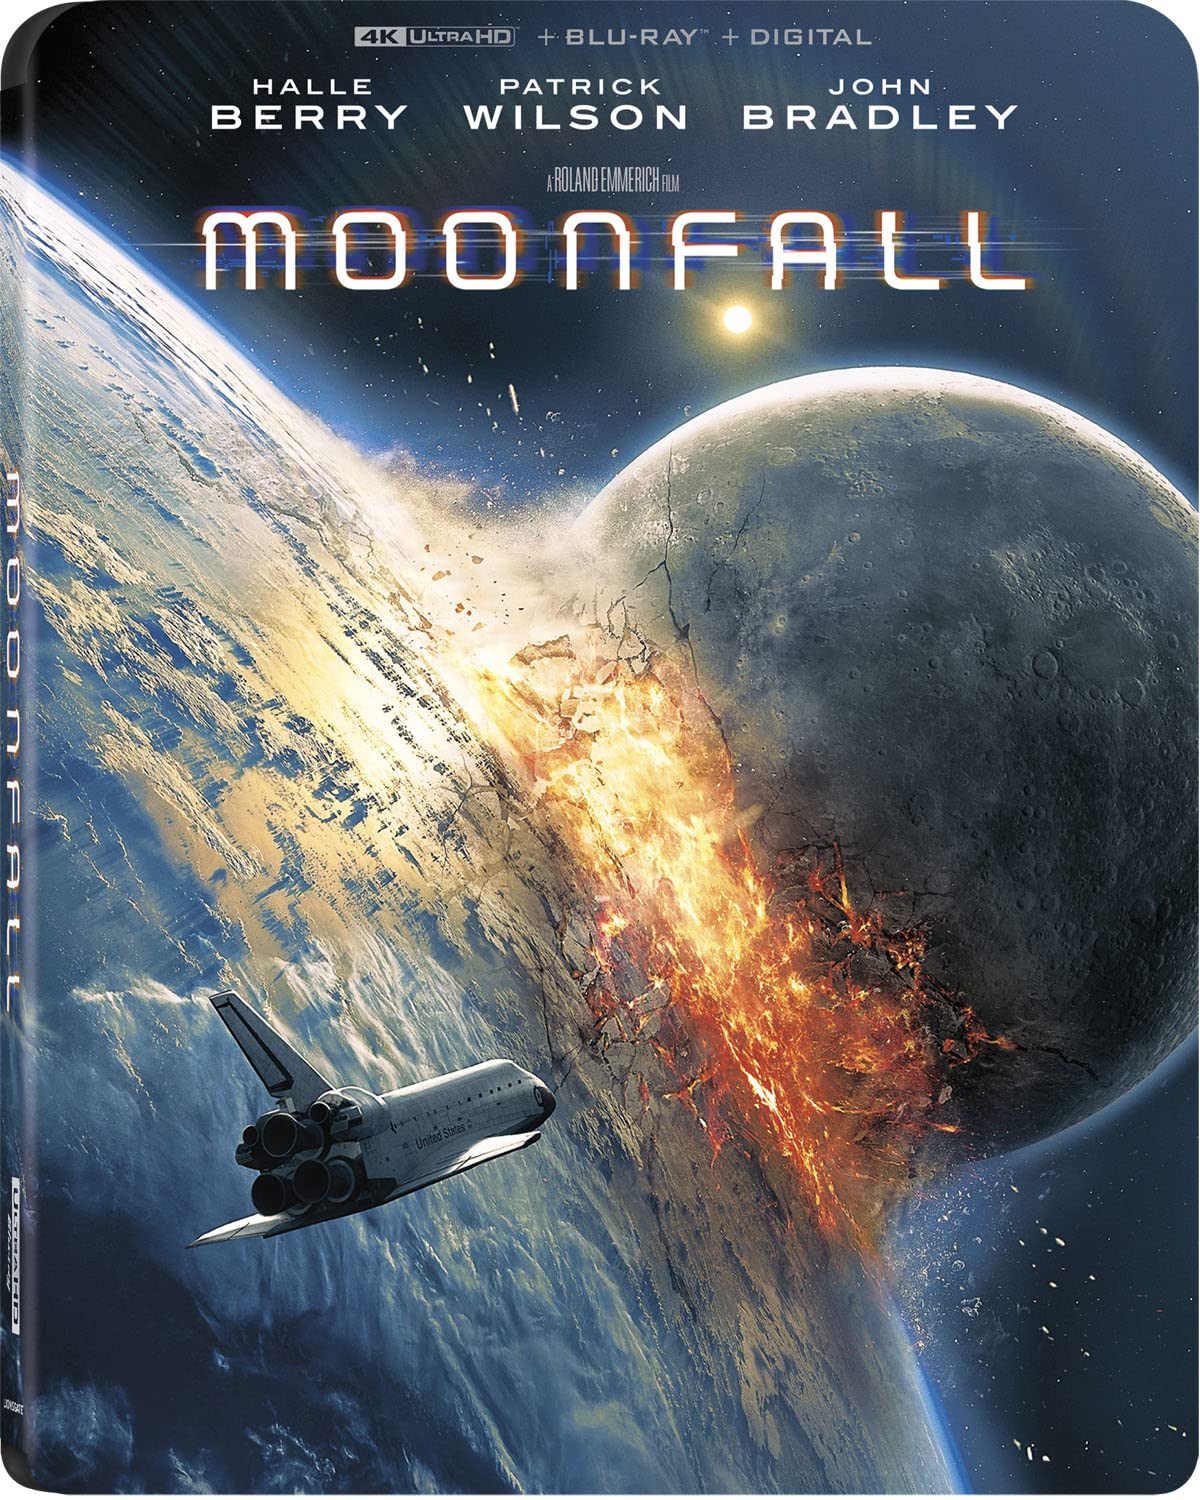 Moonfall 4k Blu-ray